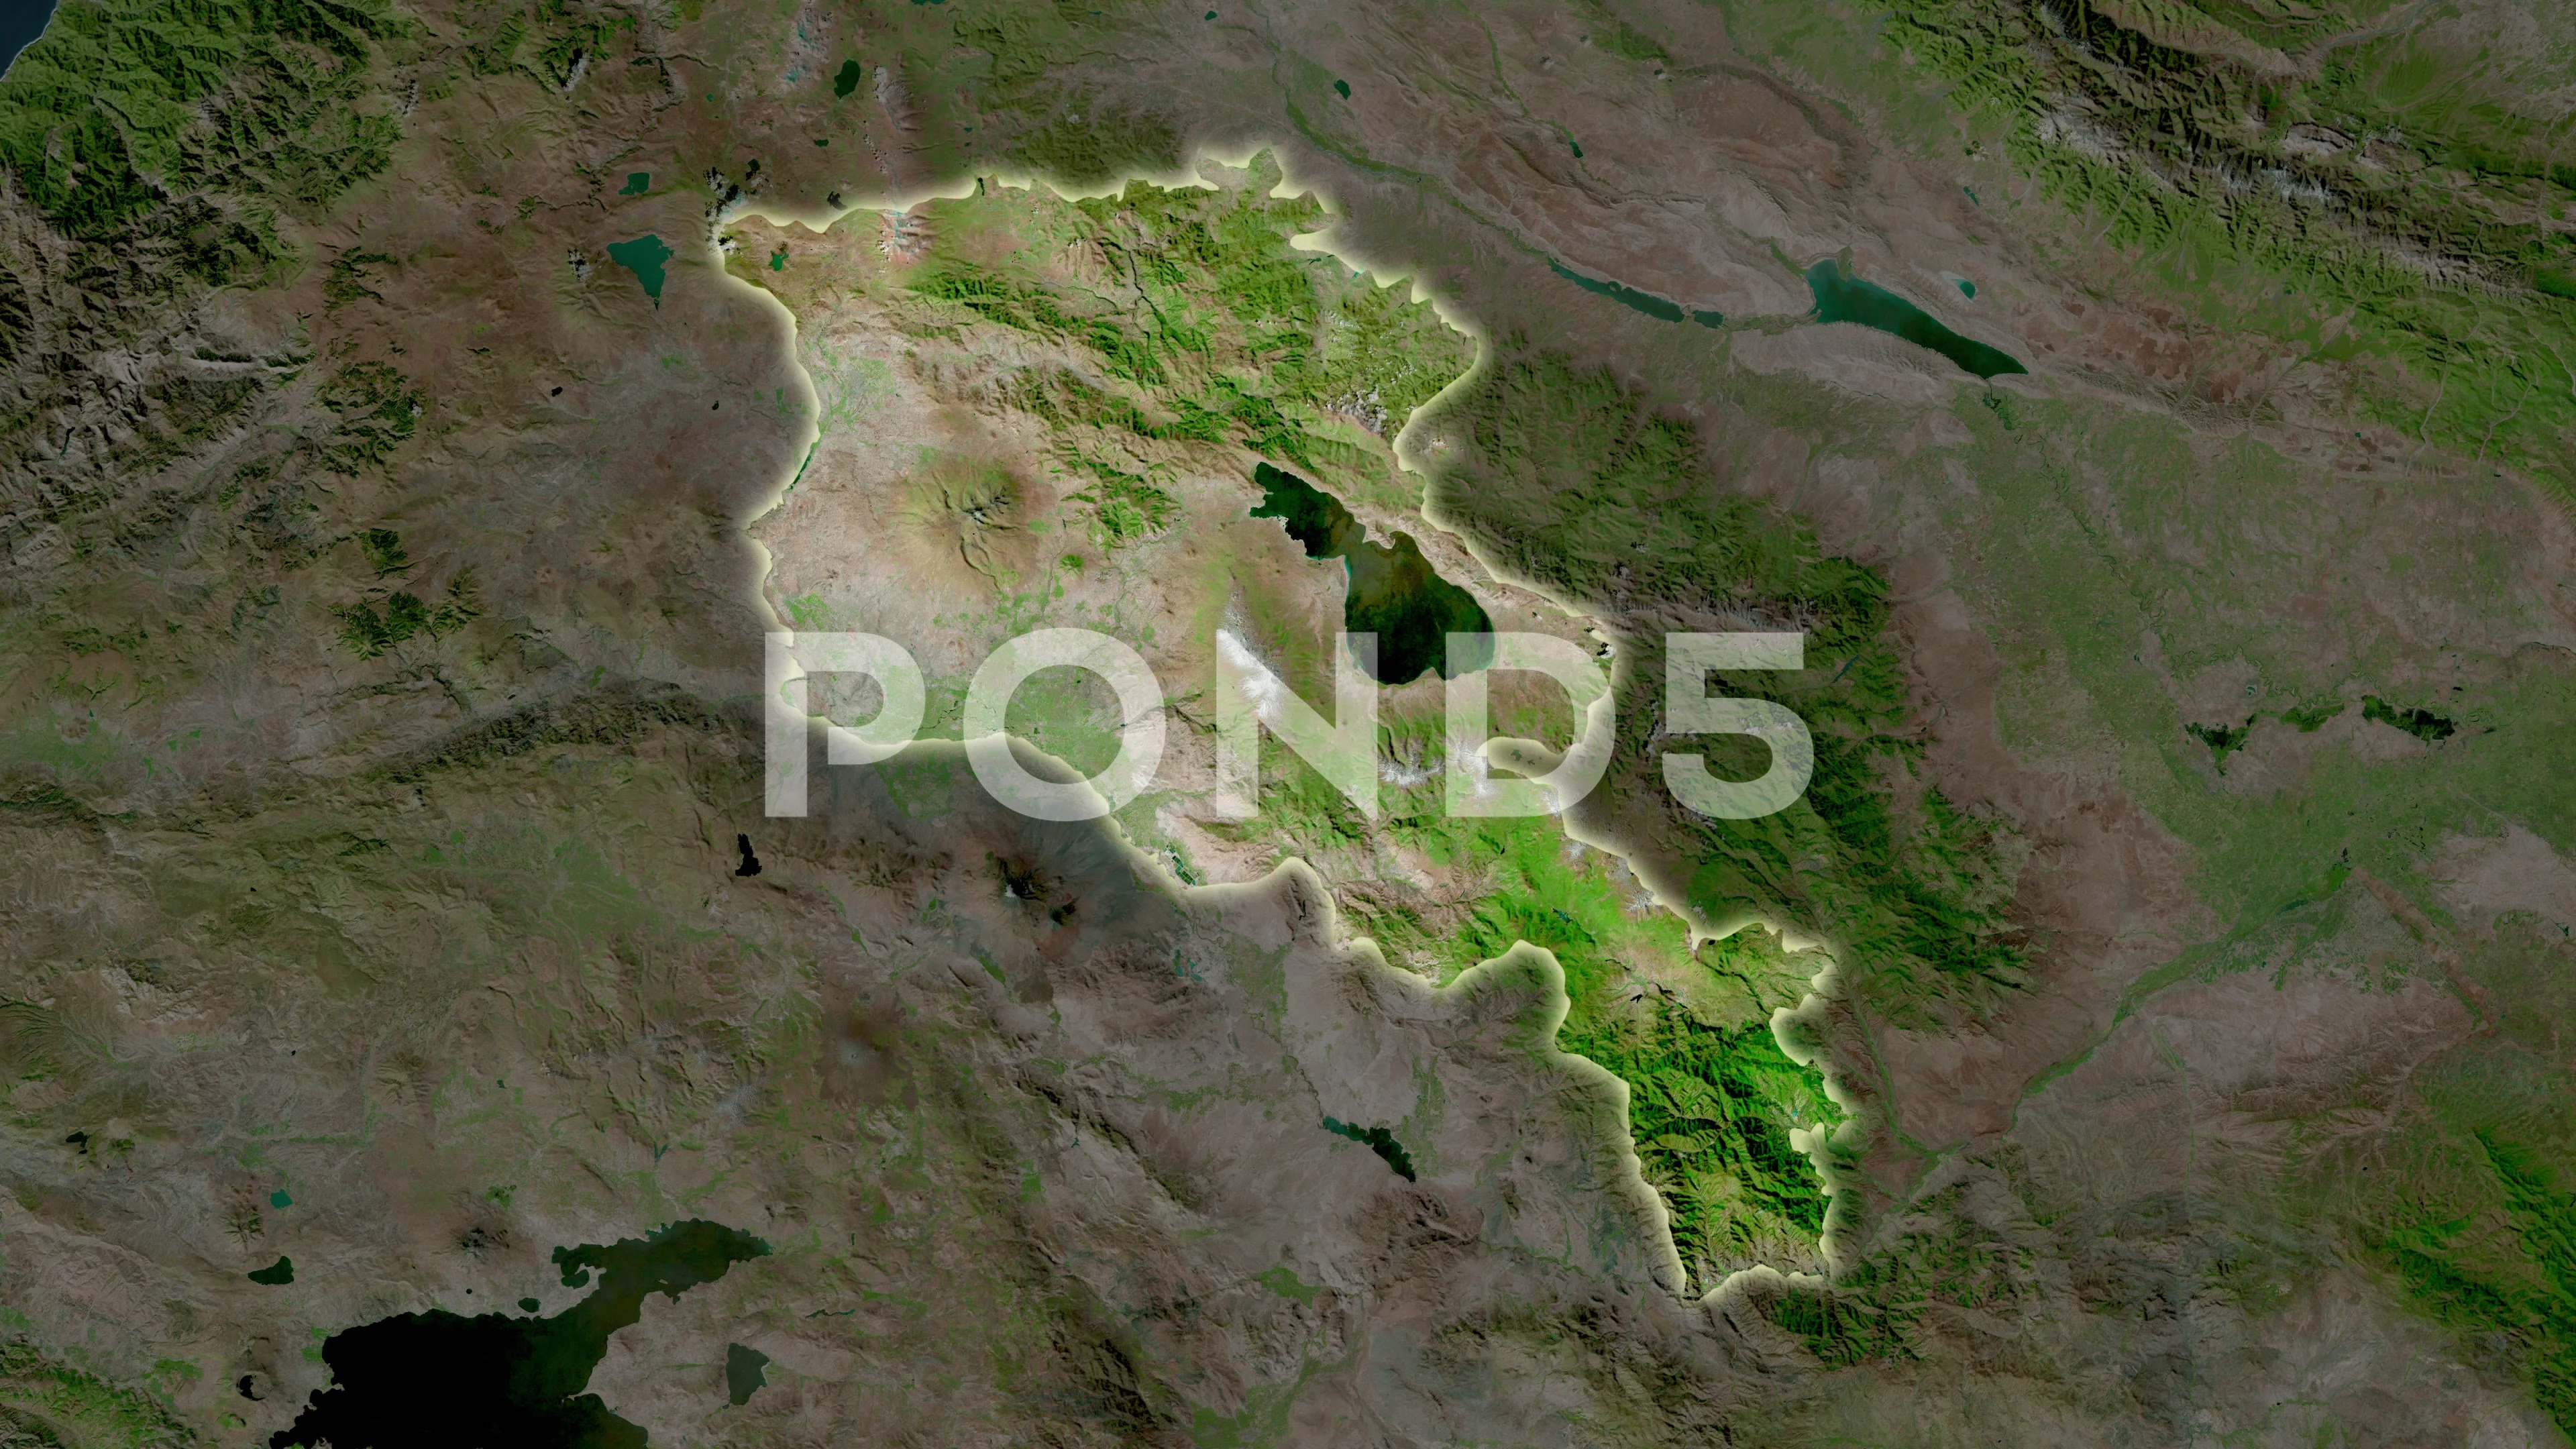 Armenia Map and Satellite Image